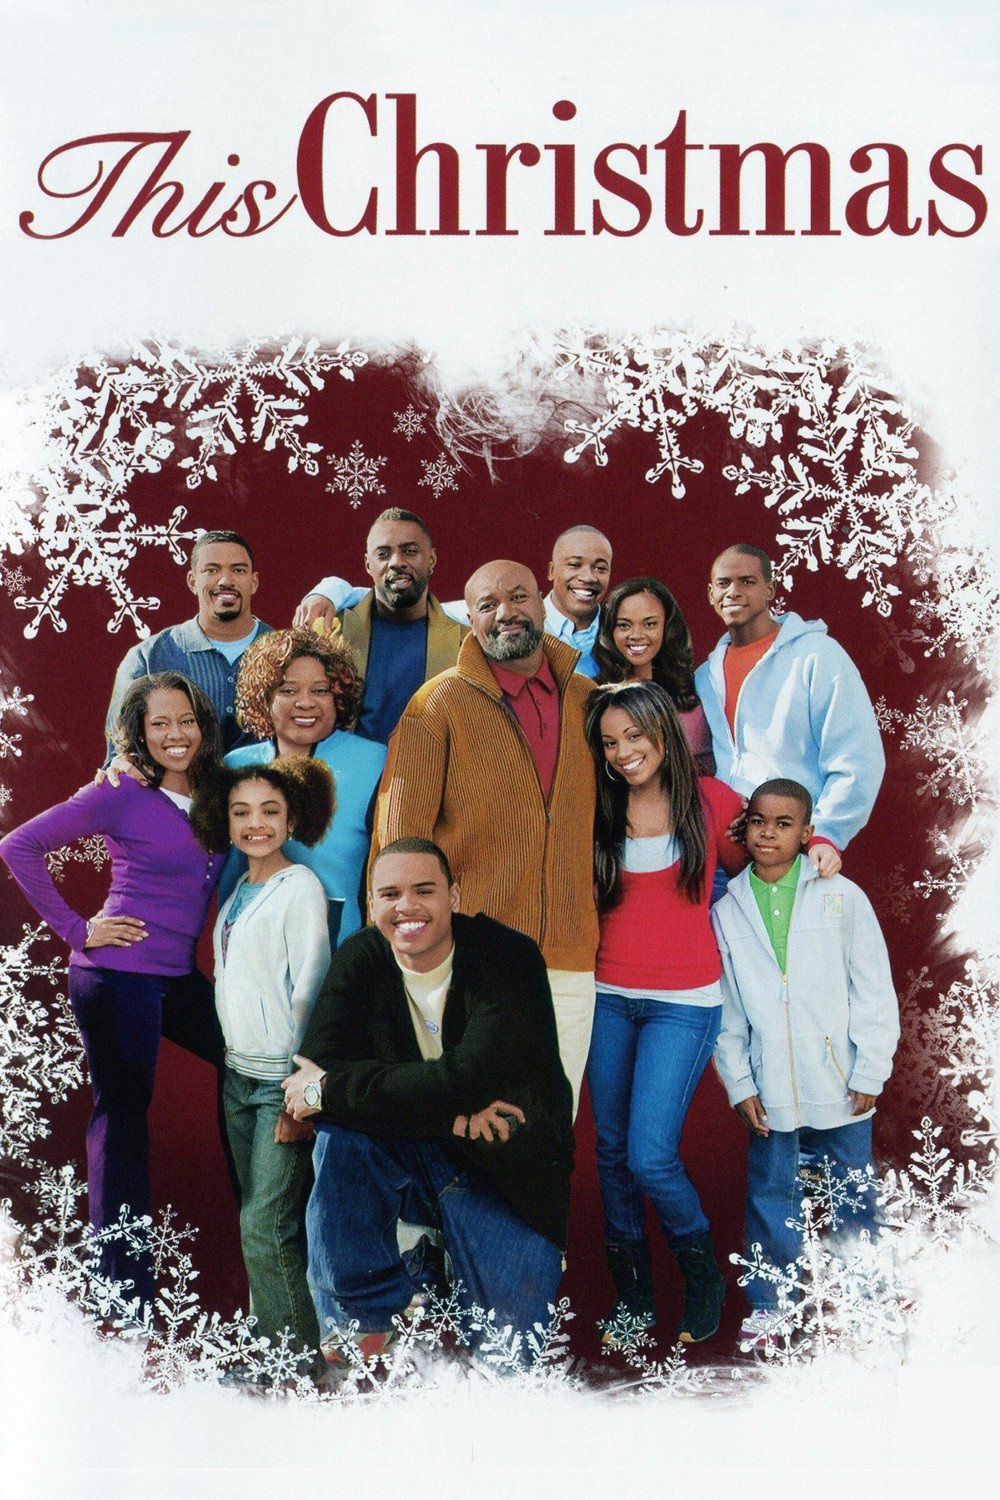 Plakat von "This Christmas"